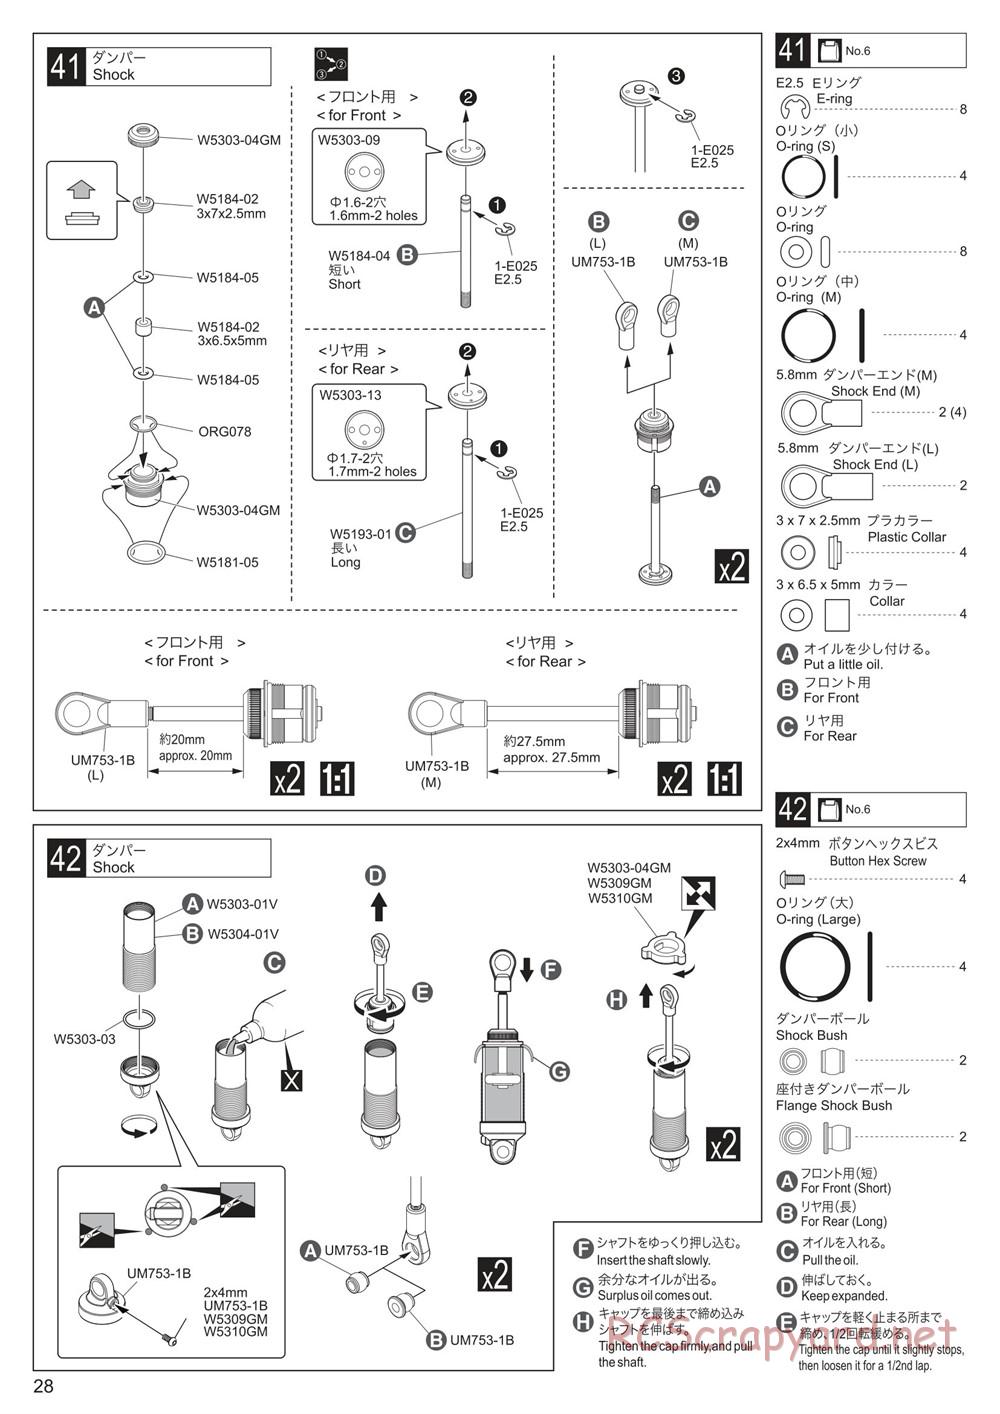 Kyosho - Lazer ZX7 - Manual - Page 29